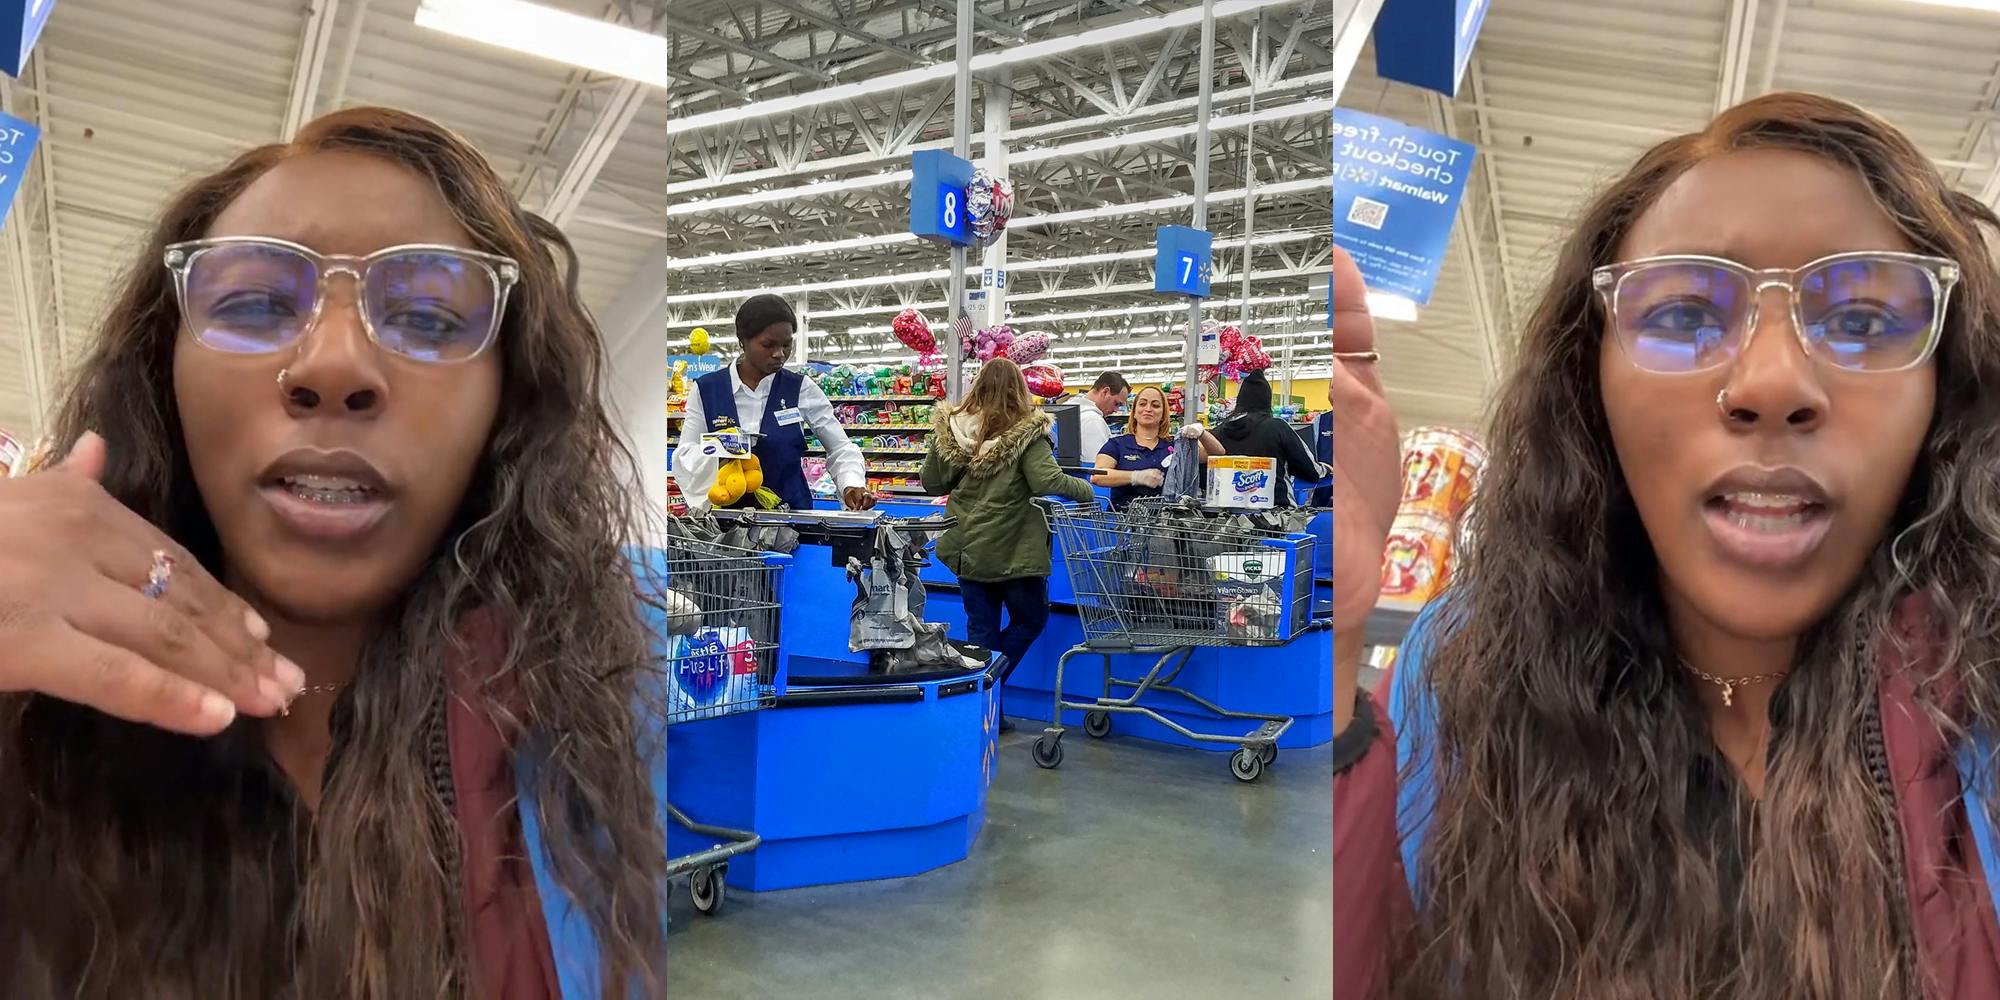 Walmart employee speaking (l) Walmart checkout lanes (c) Walmart employee speaking (r)